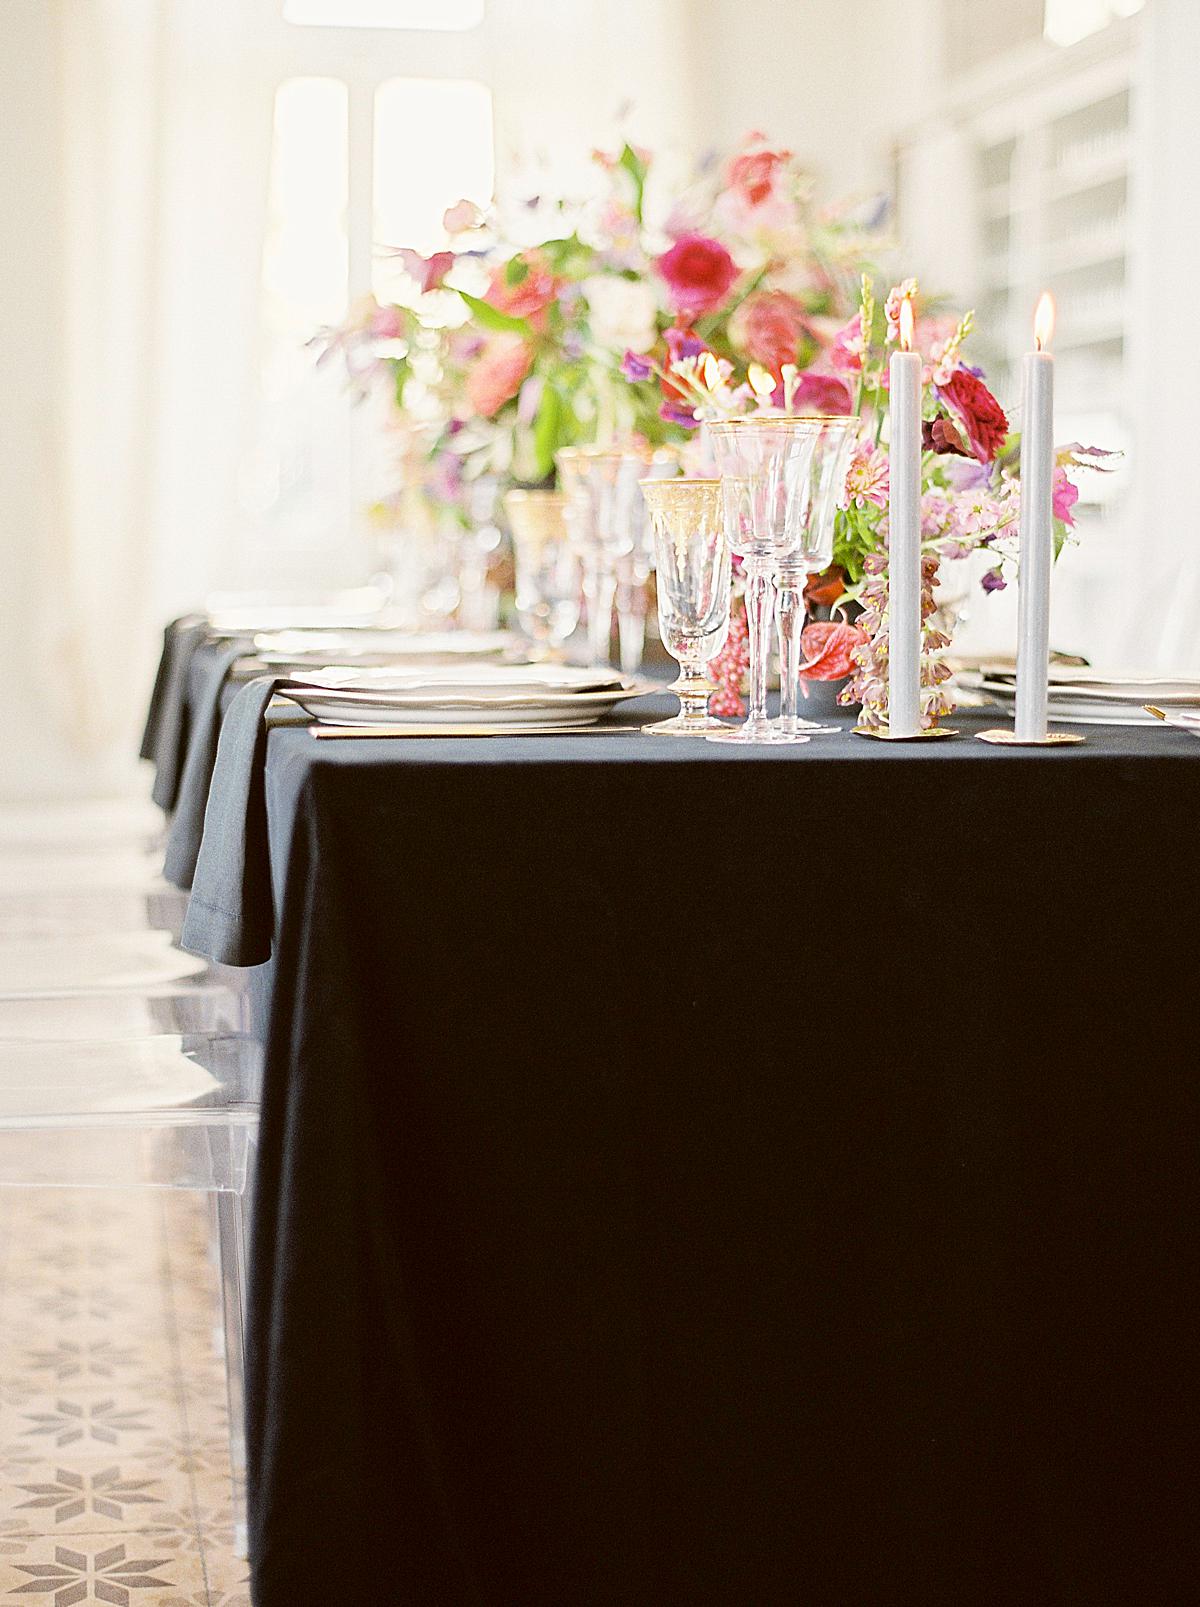 wedding table set up at poseidonio hotel greece